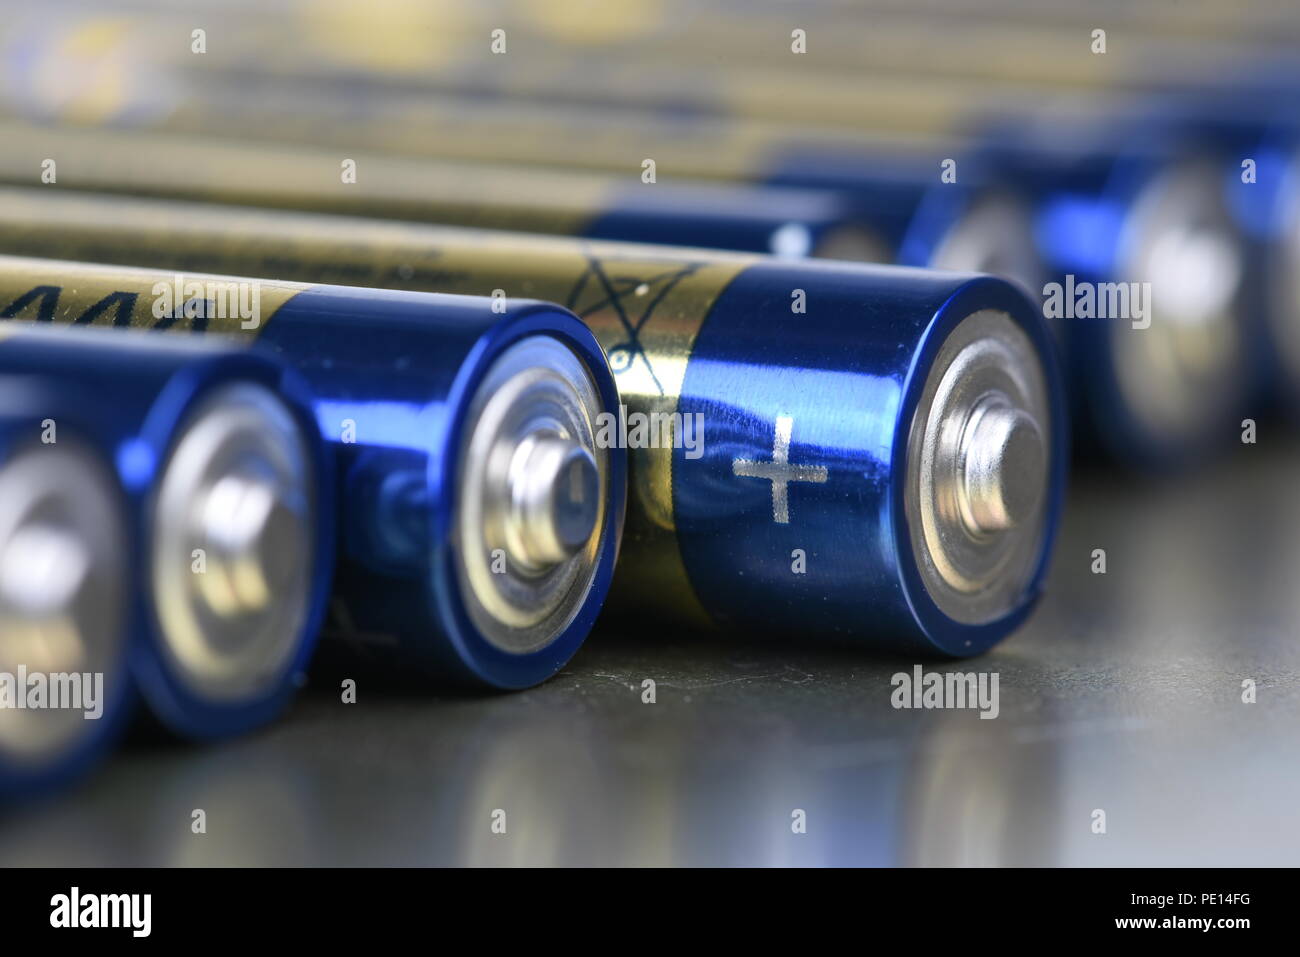 AAA alkaline batteries in perspective on metal background Stock Photo